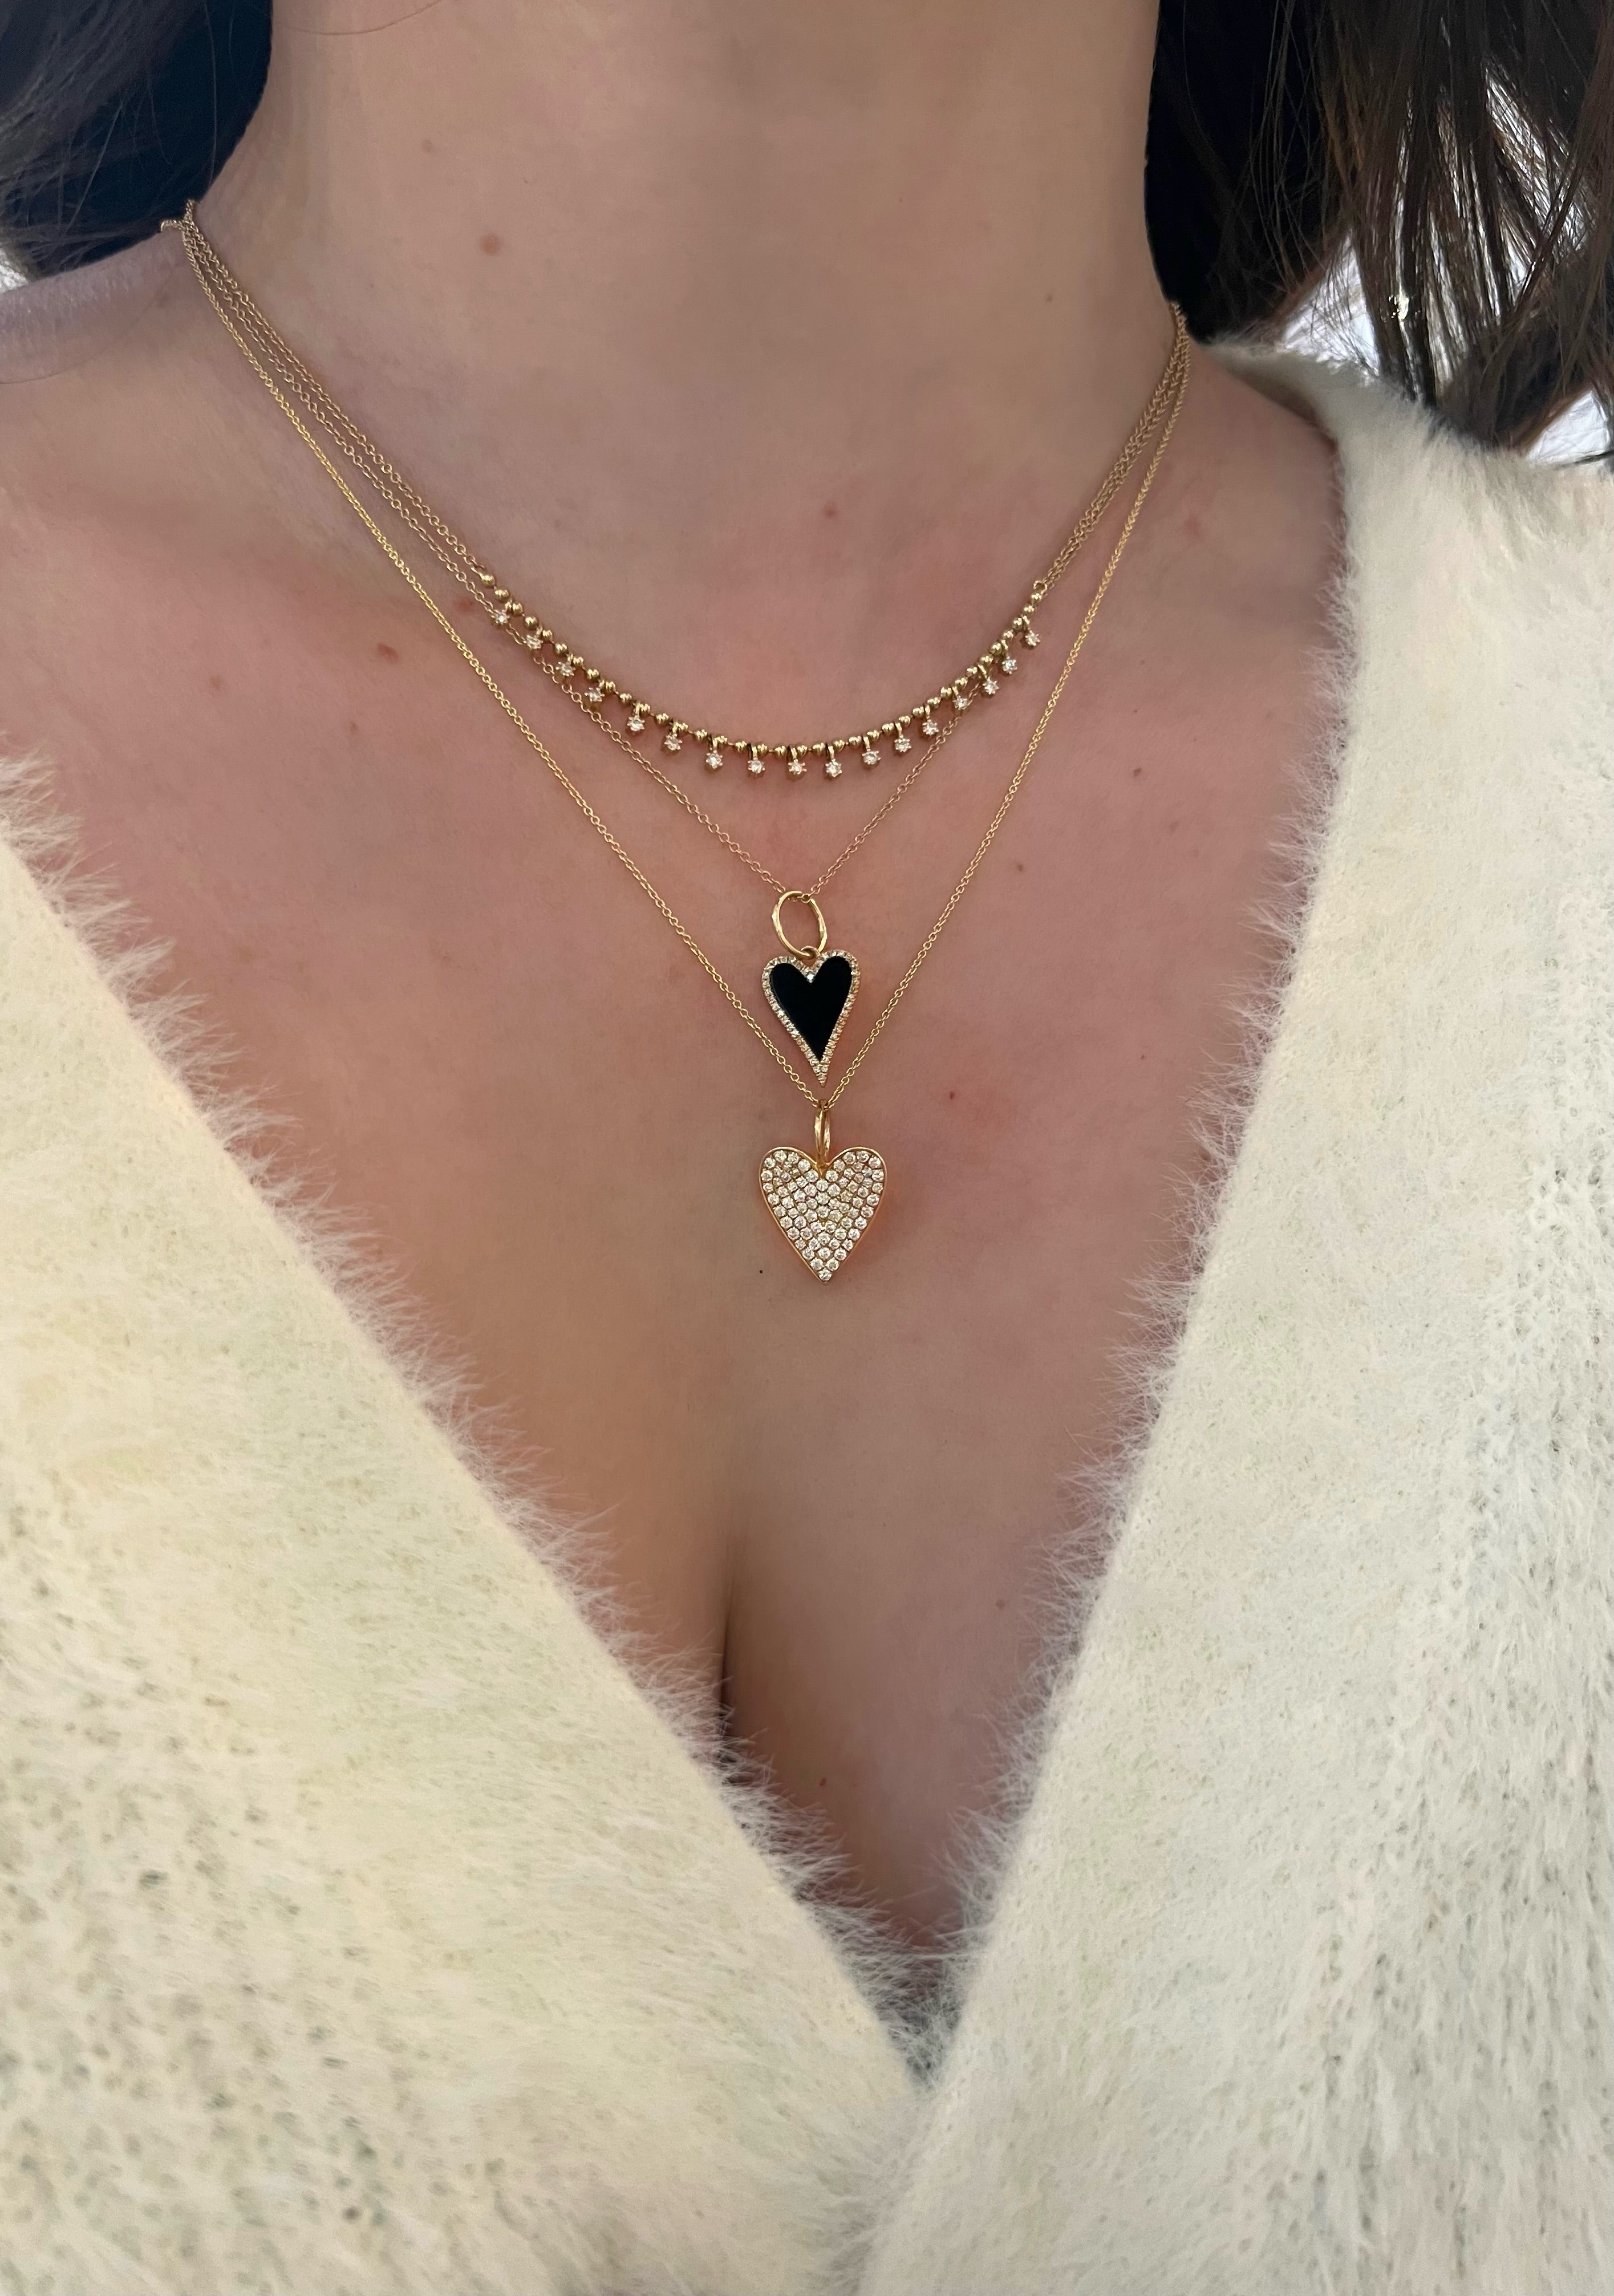 WD1289 14kt Gold Pave Diamond Heart Pendant